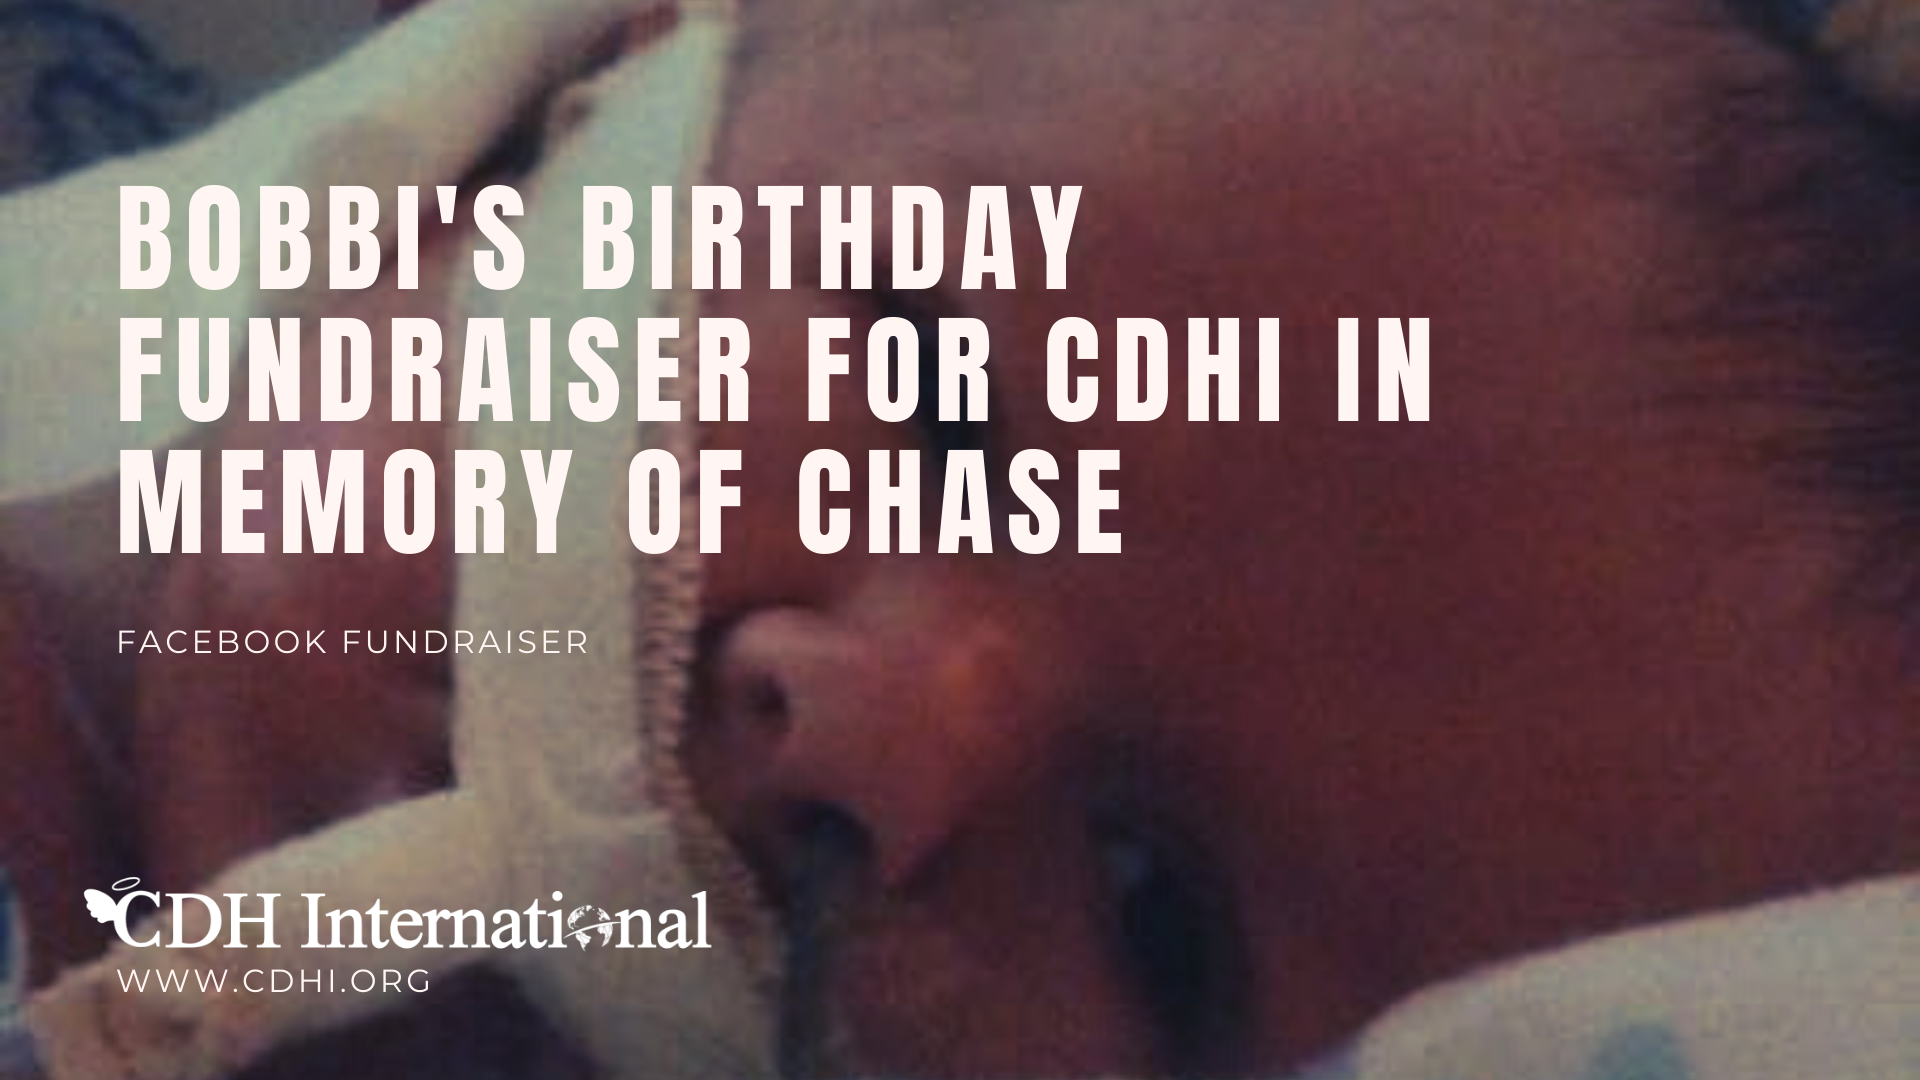 Chris’s Birthday Fundraiser For CDH International